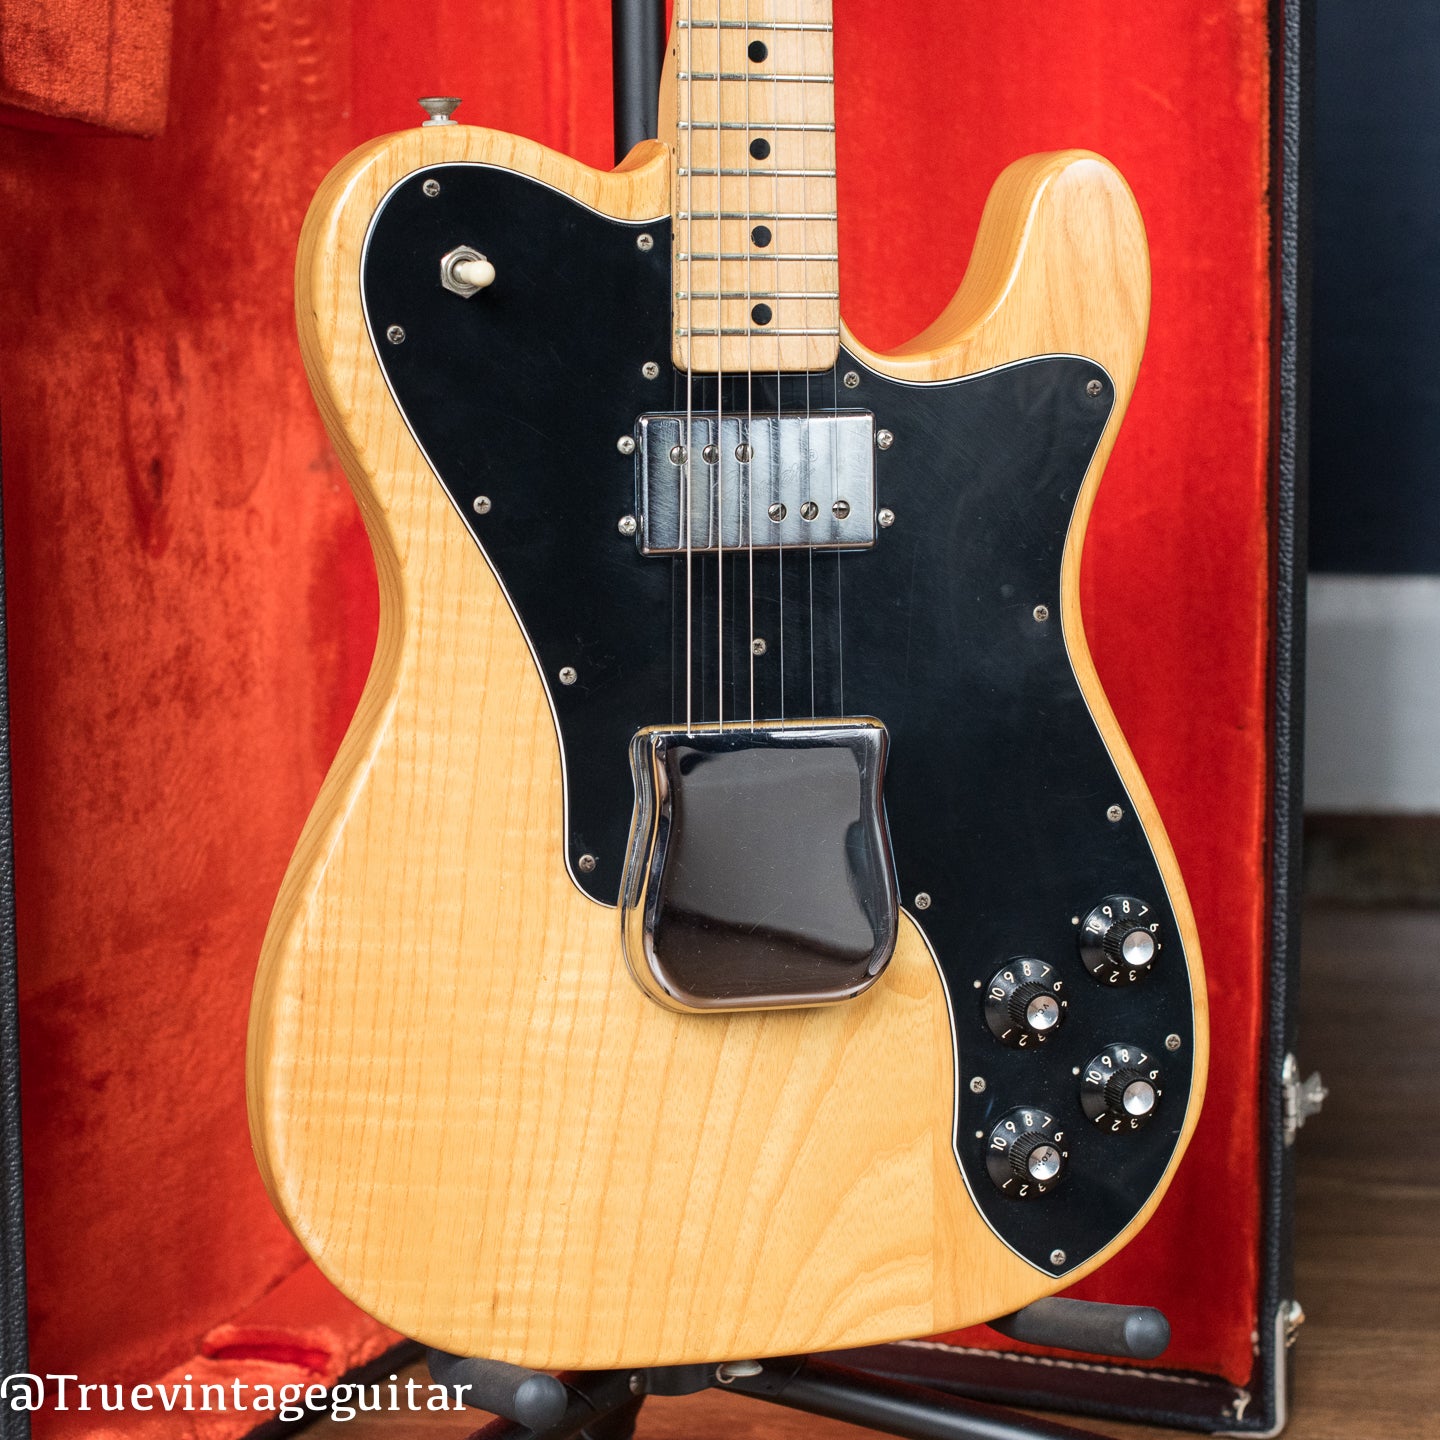 1975 Fender Telecaster Custom Natural body with bridge cover